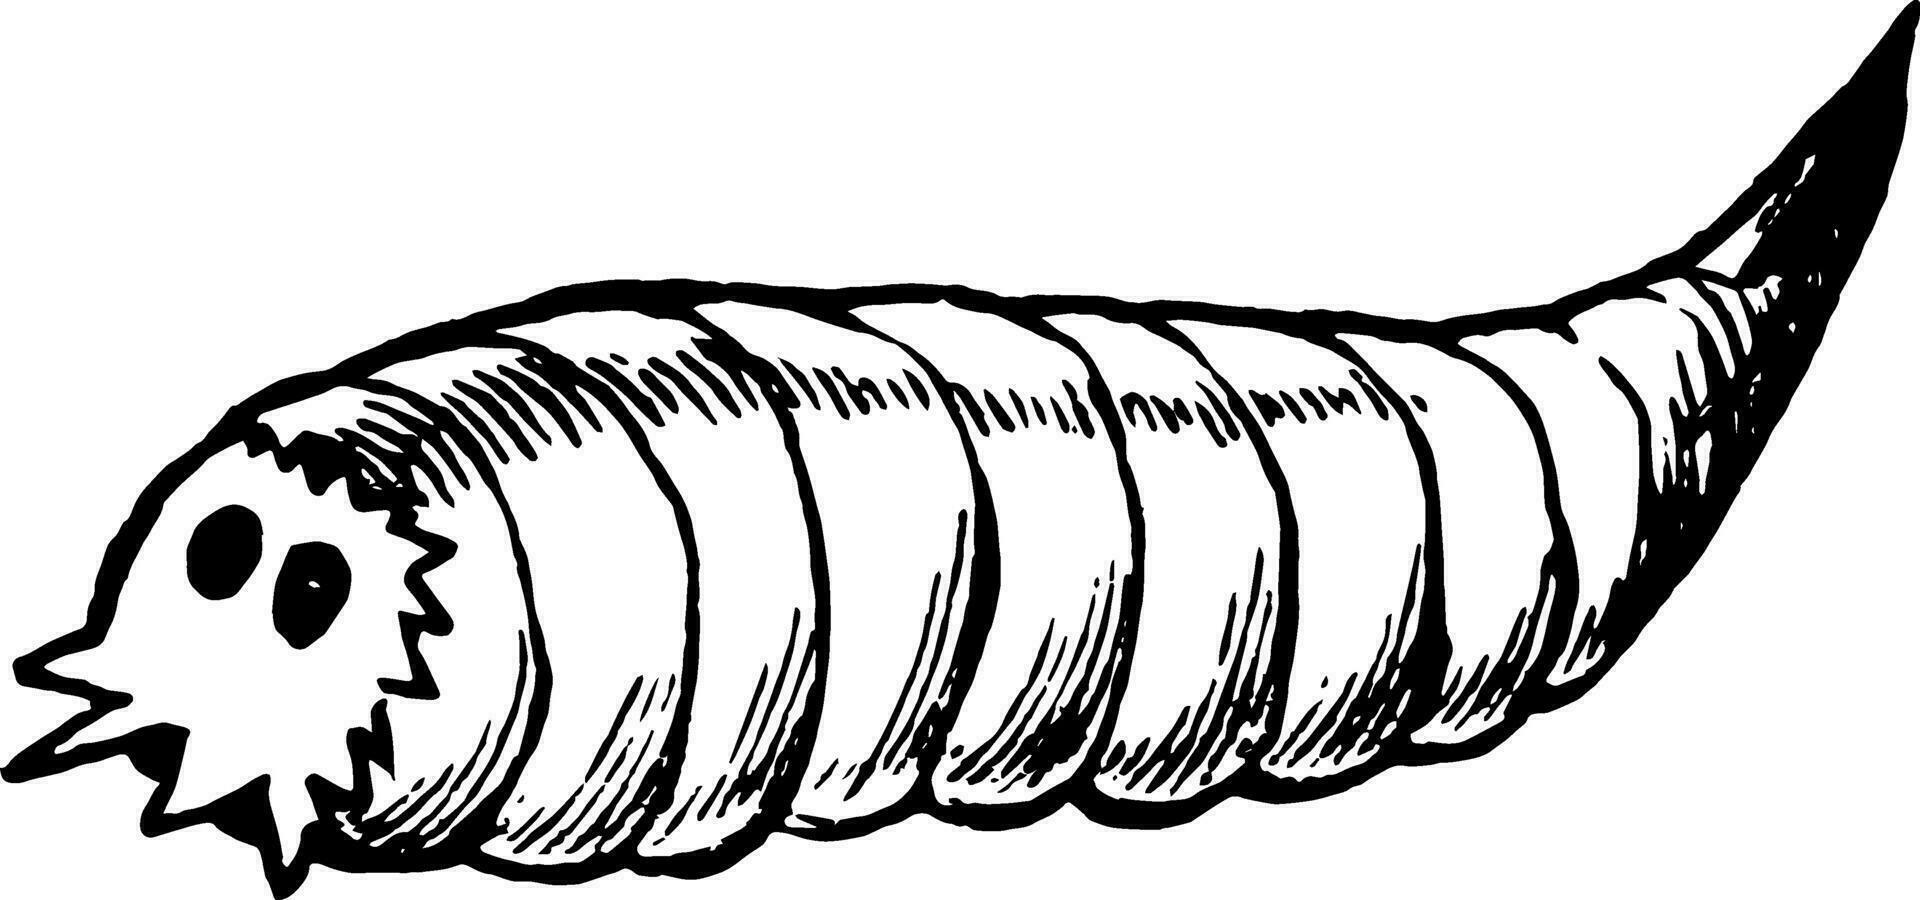 Seed Corn Maggot vintage illustration. vector